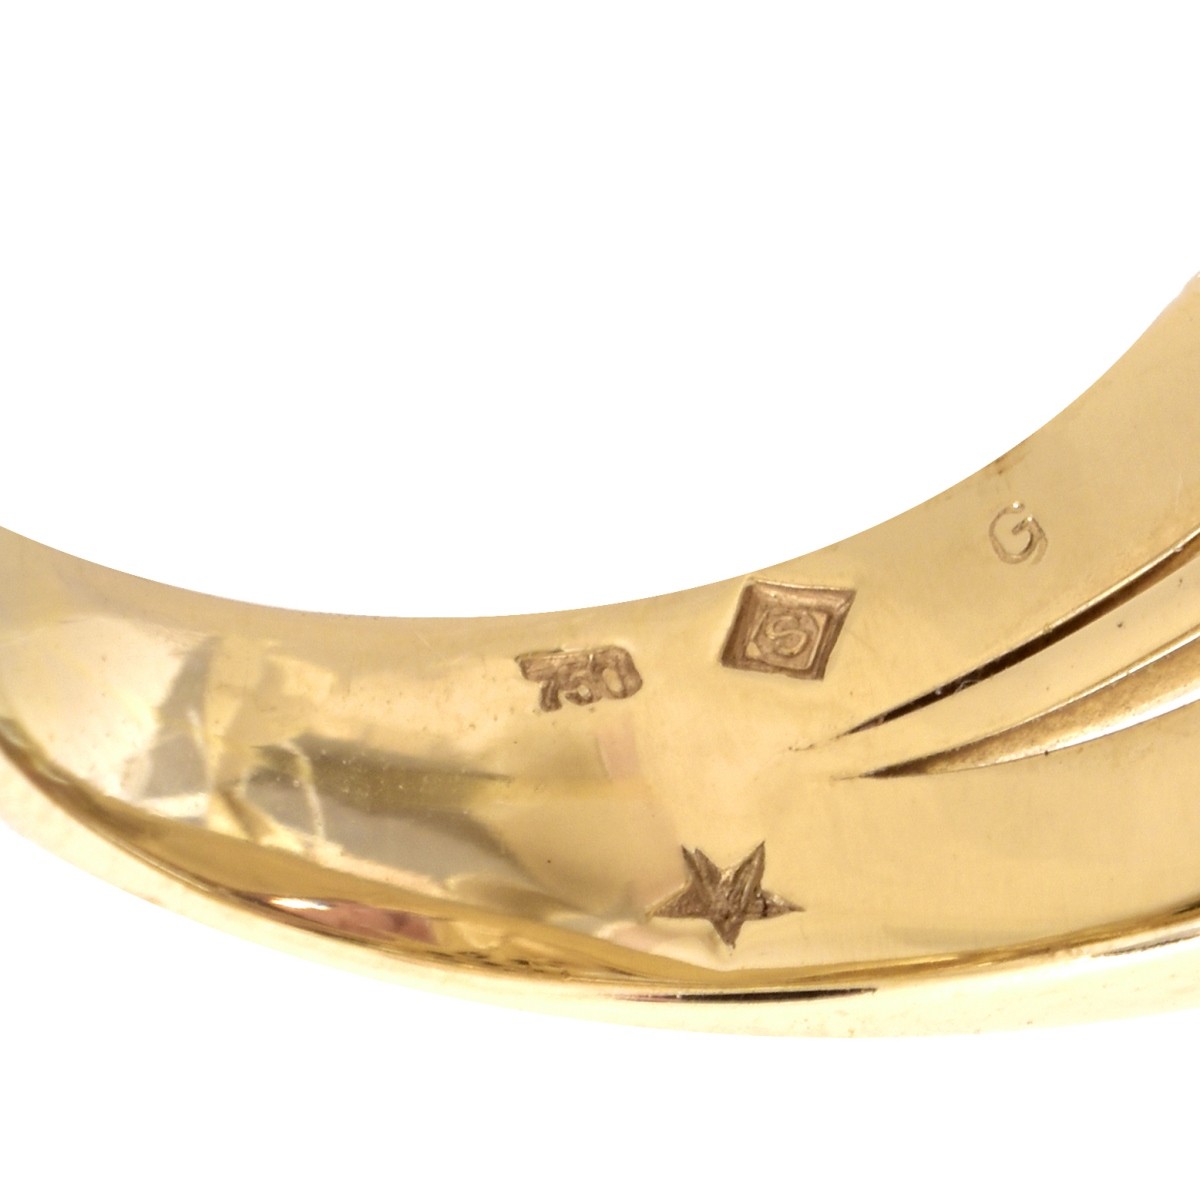 H. Stern Smokey Quartz and 18K Gold Ring